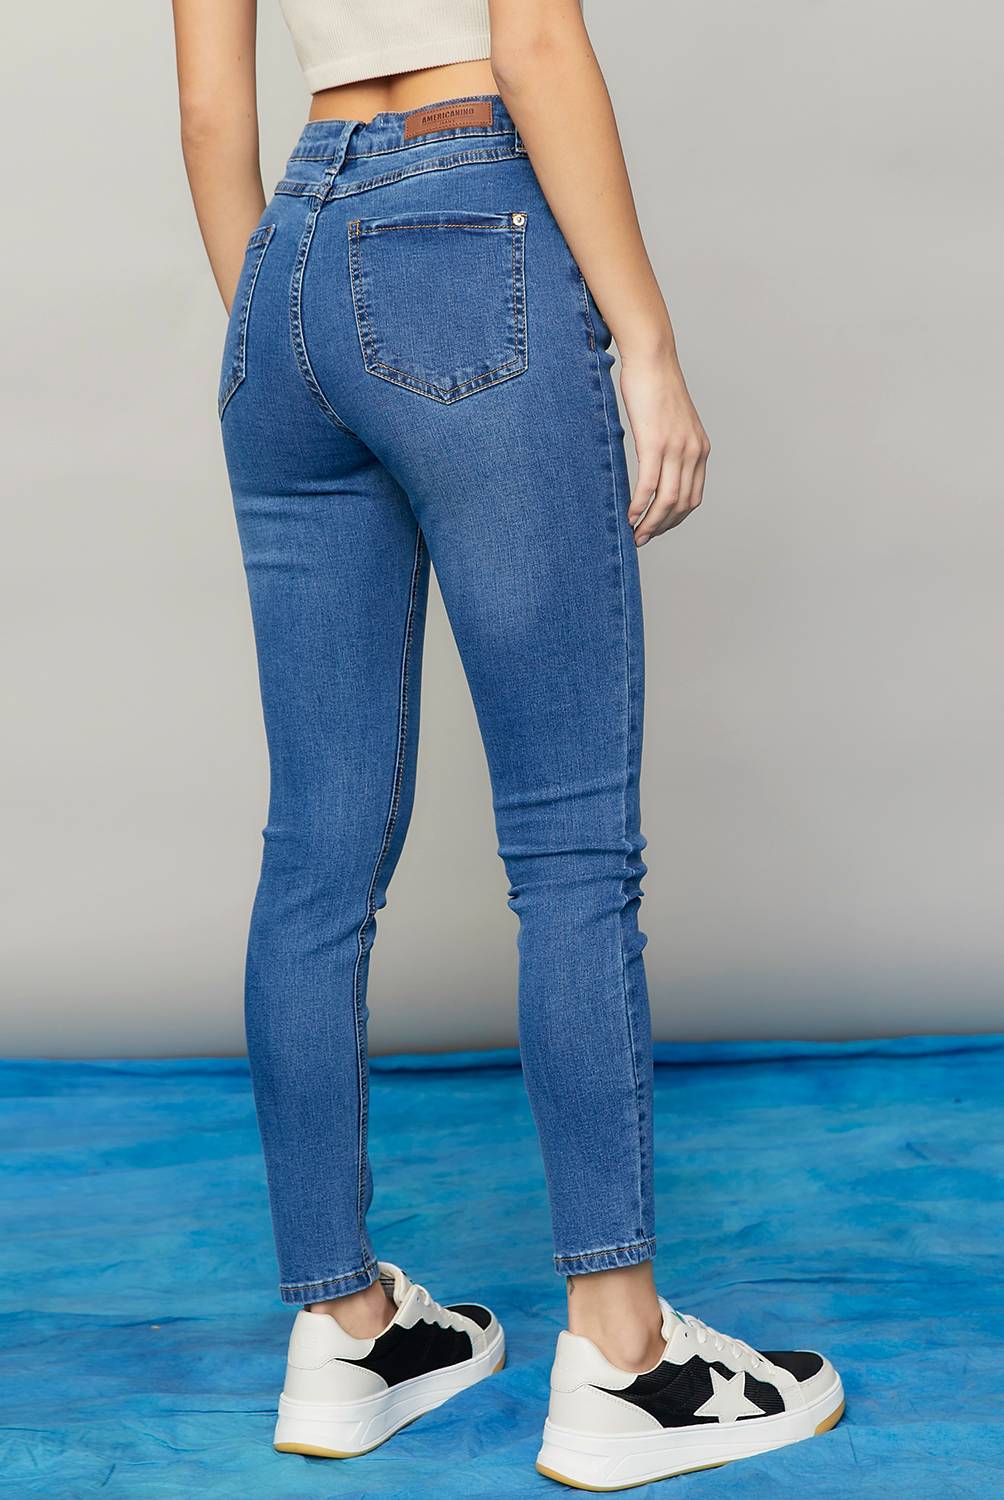 Pantalon Mujer Standard Invierno – Mercado Americano